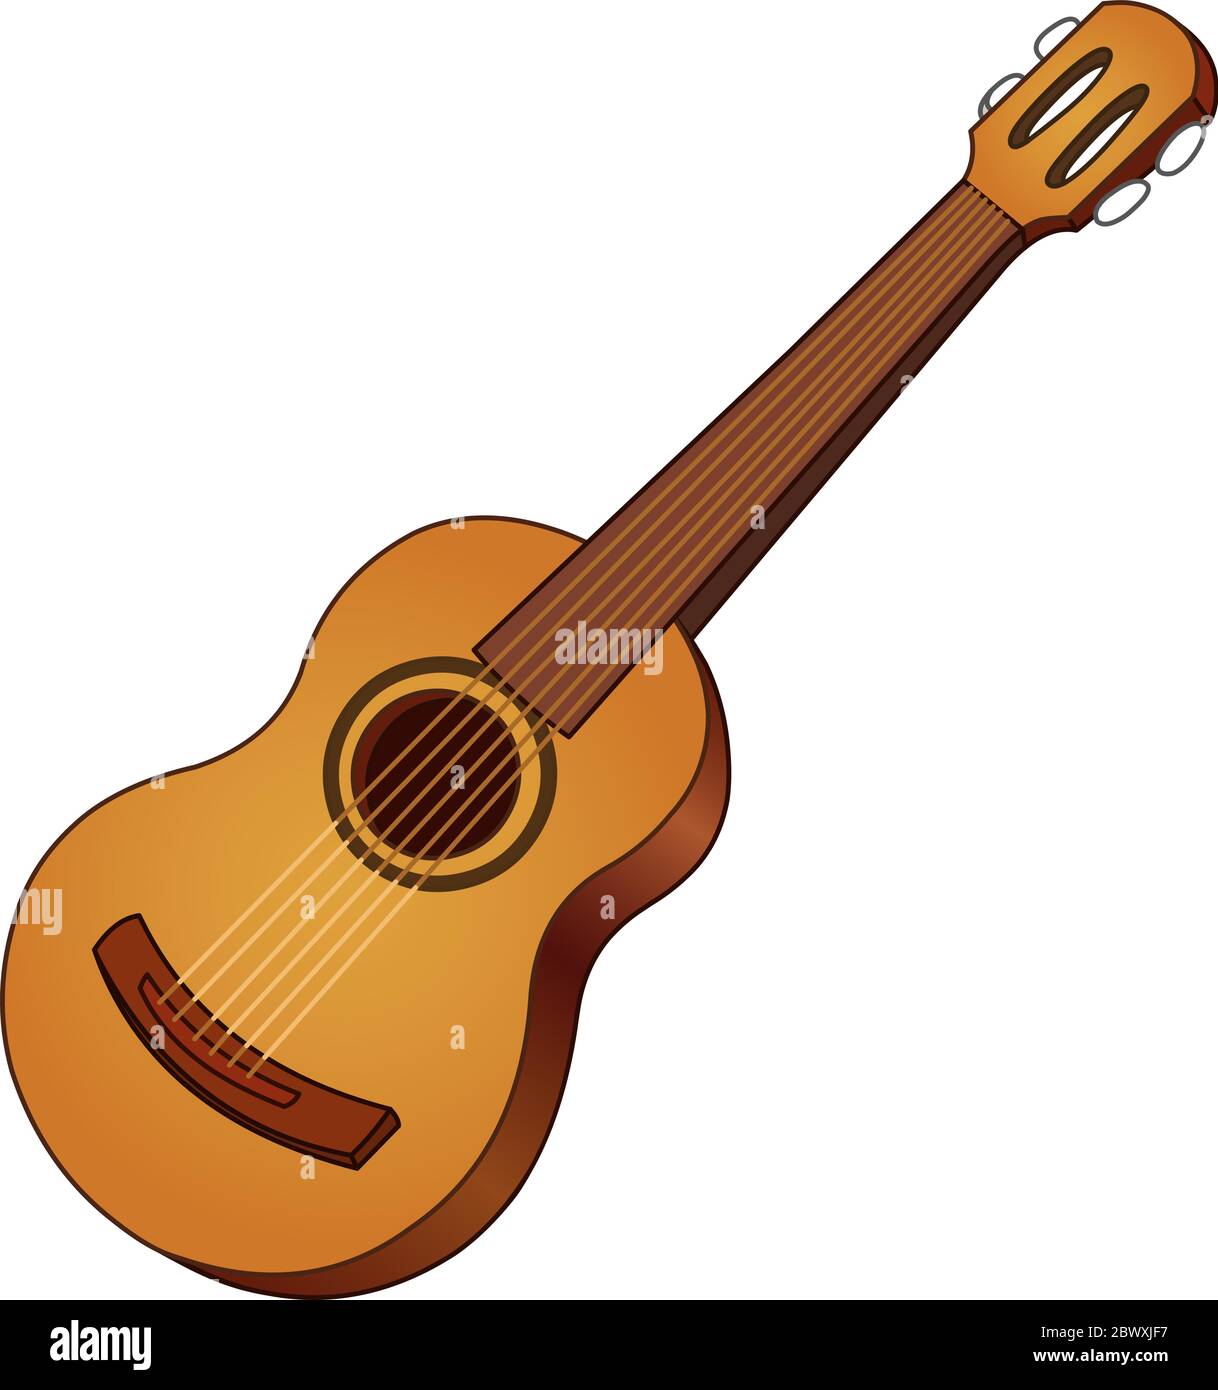 Acoustic guitar cartoon clip art Banque d'images vectorielles - Alamy